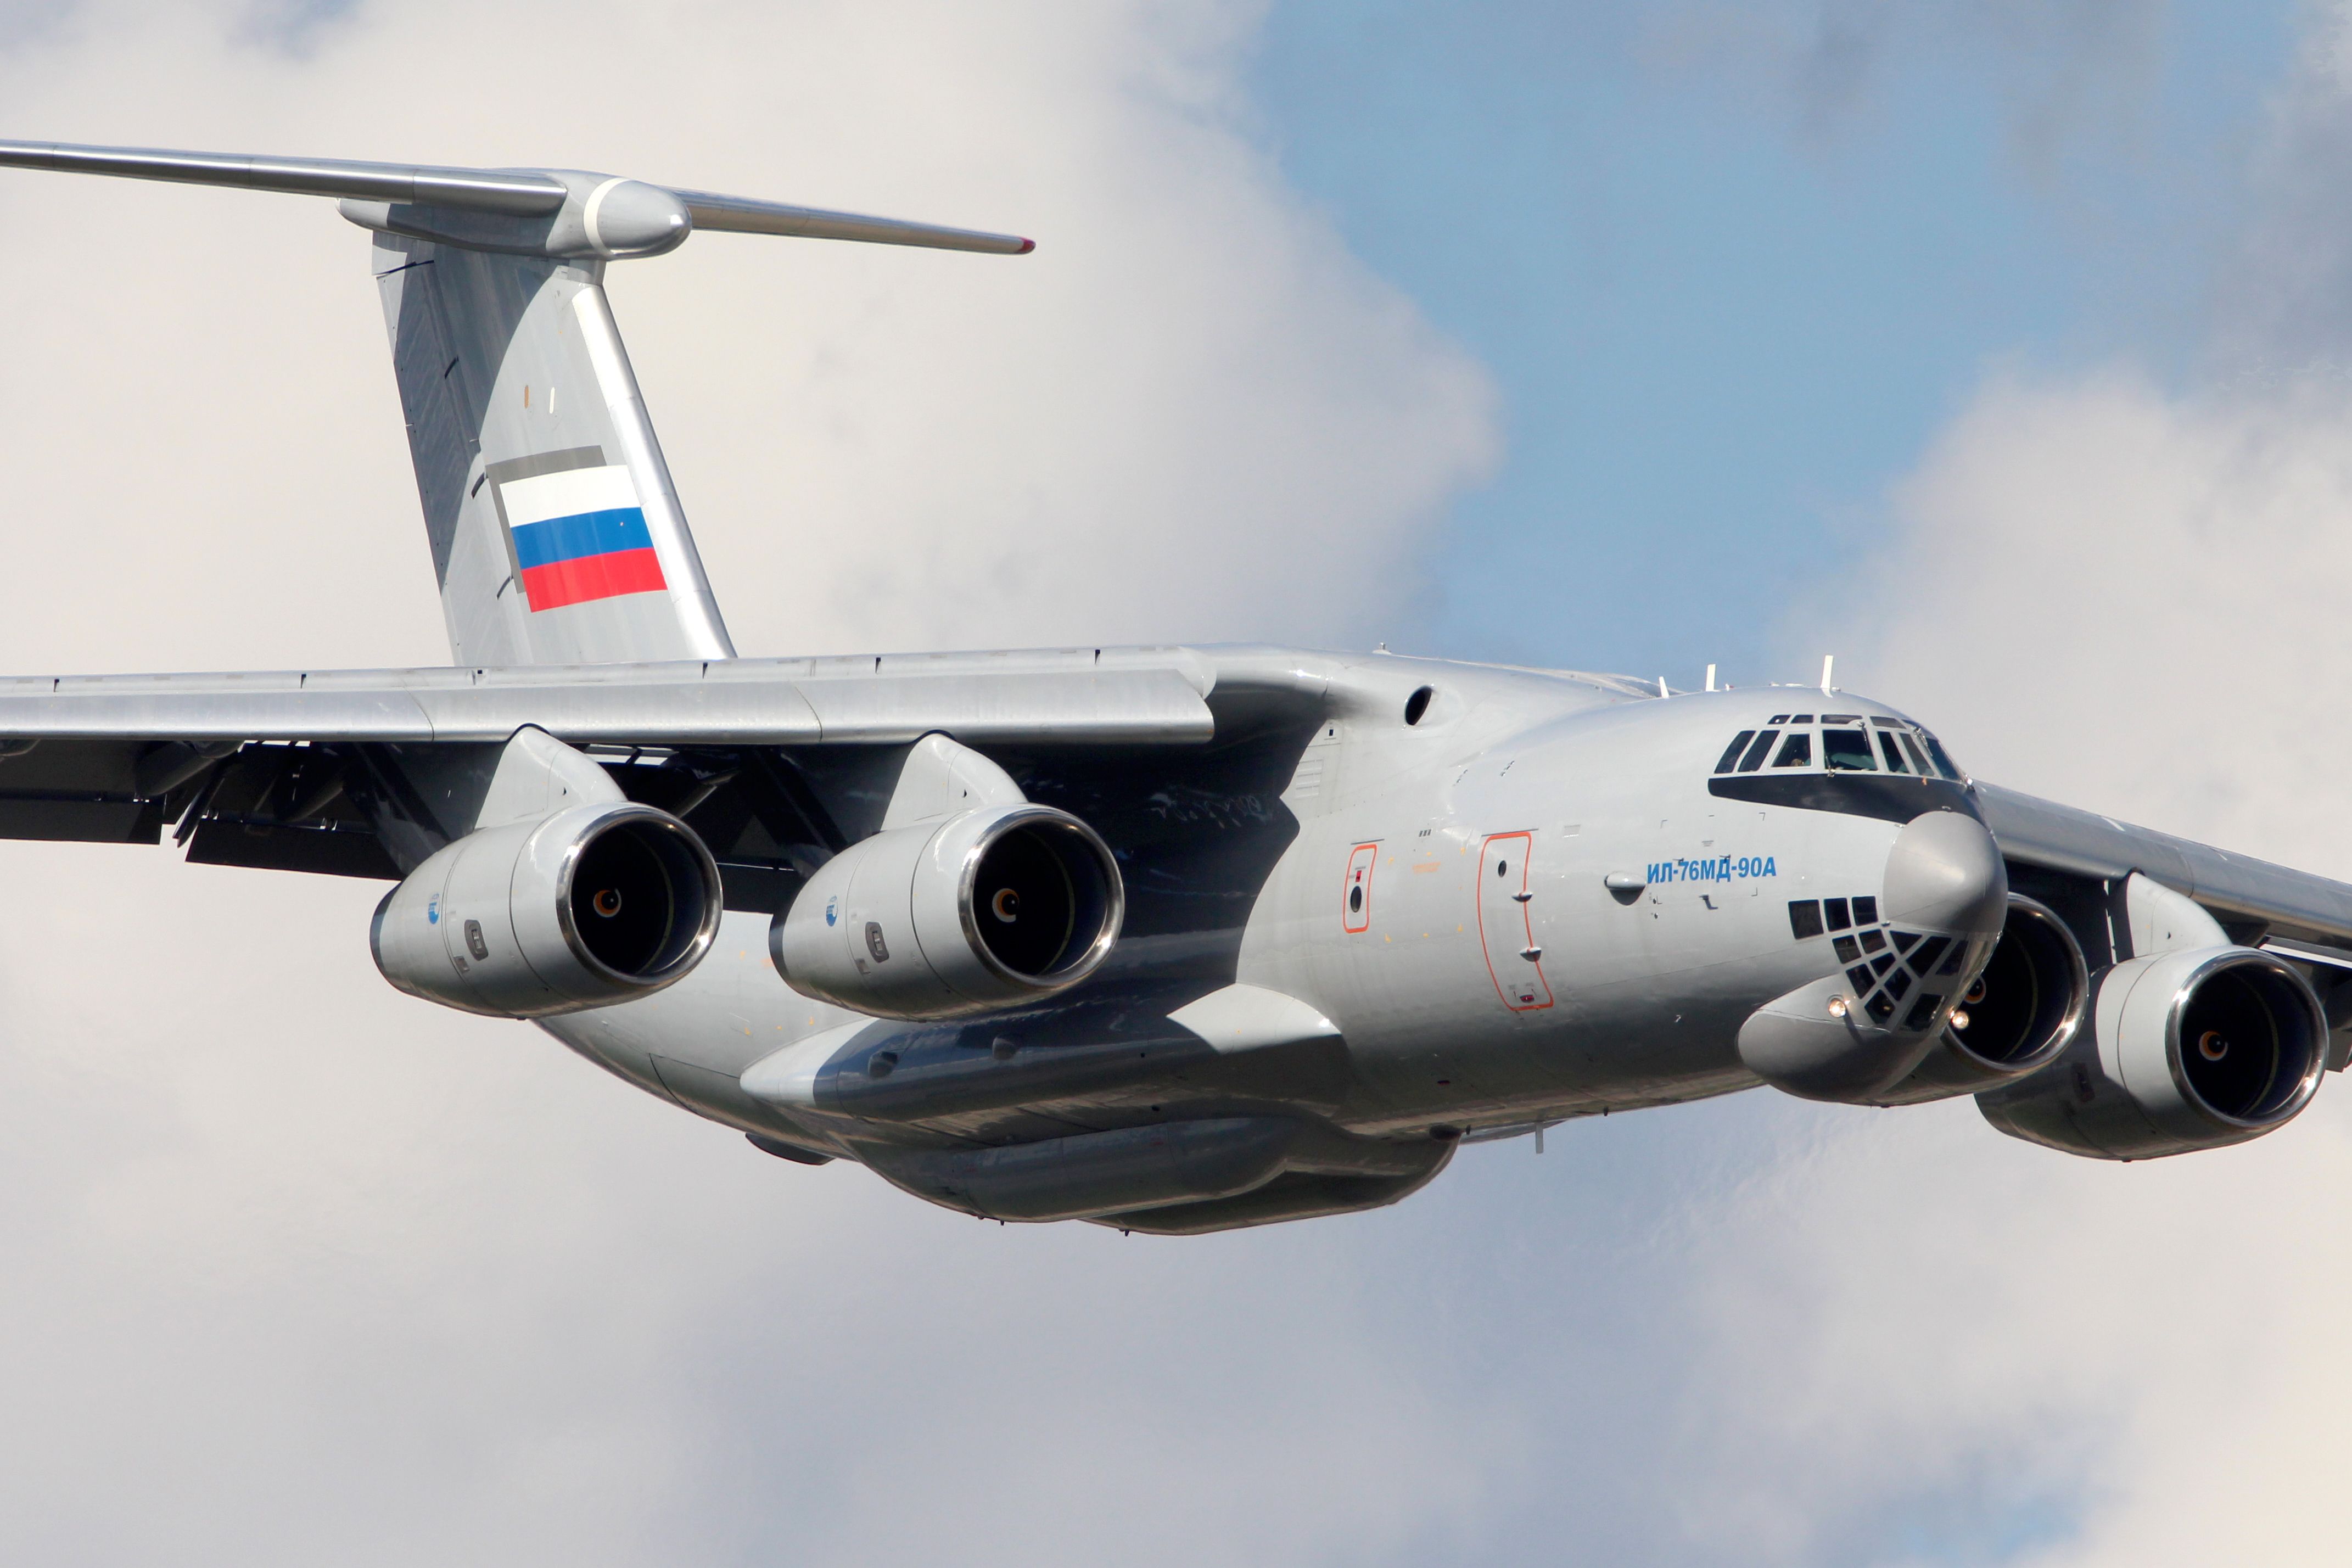 Ilyushin Il-76 flying above Moscow shutterstock_352758764